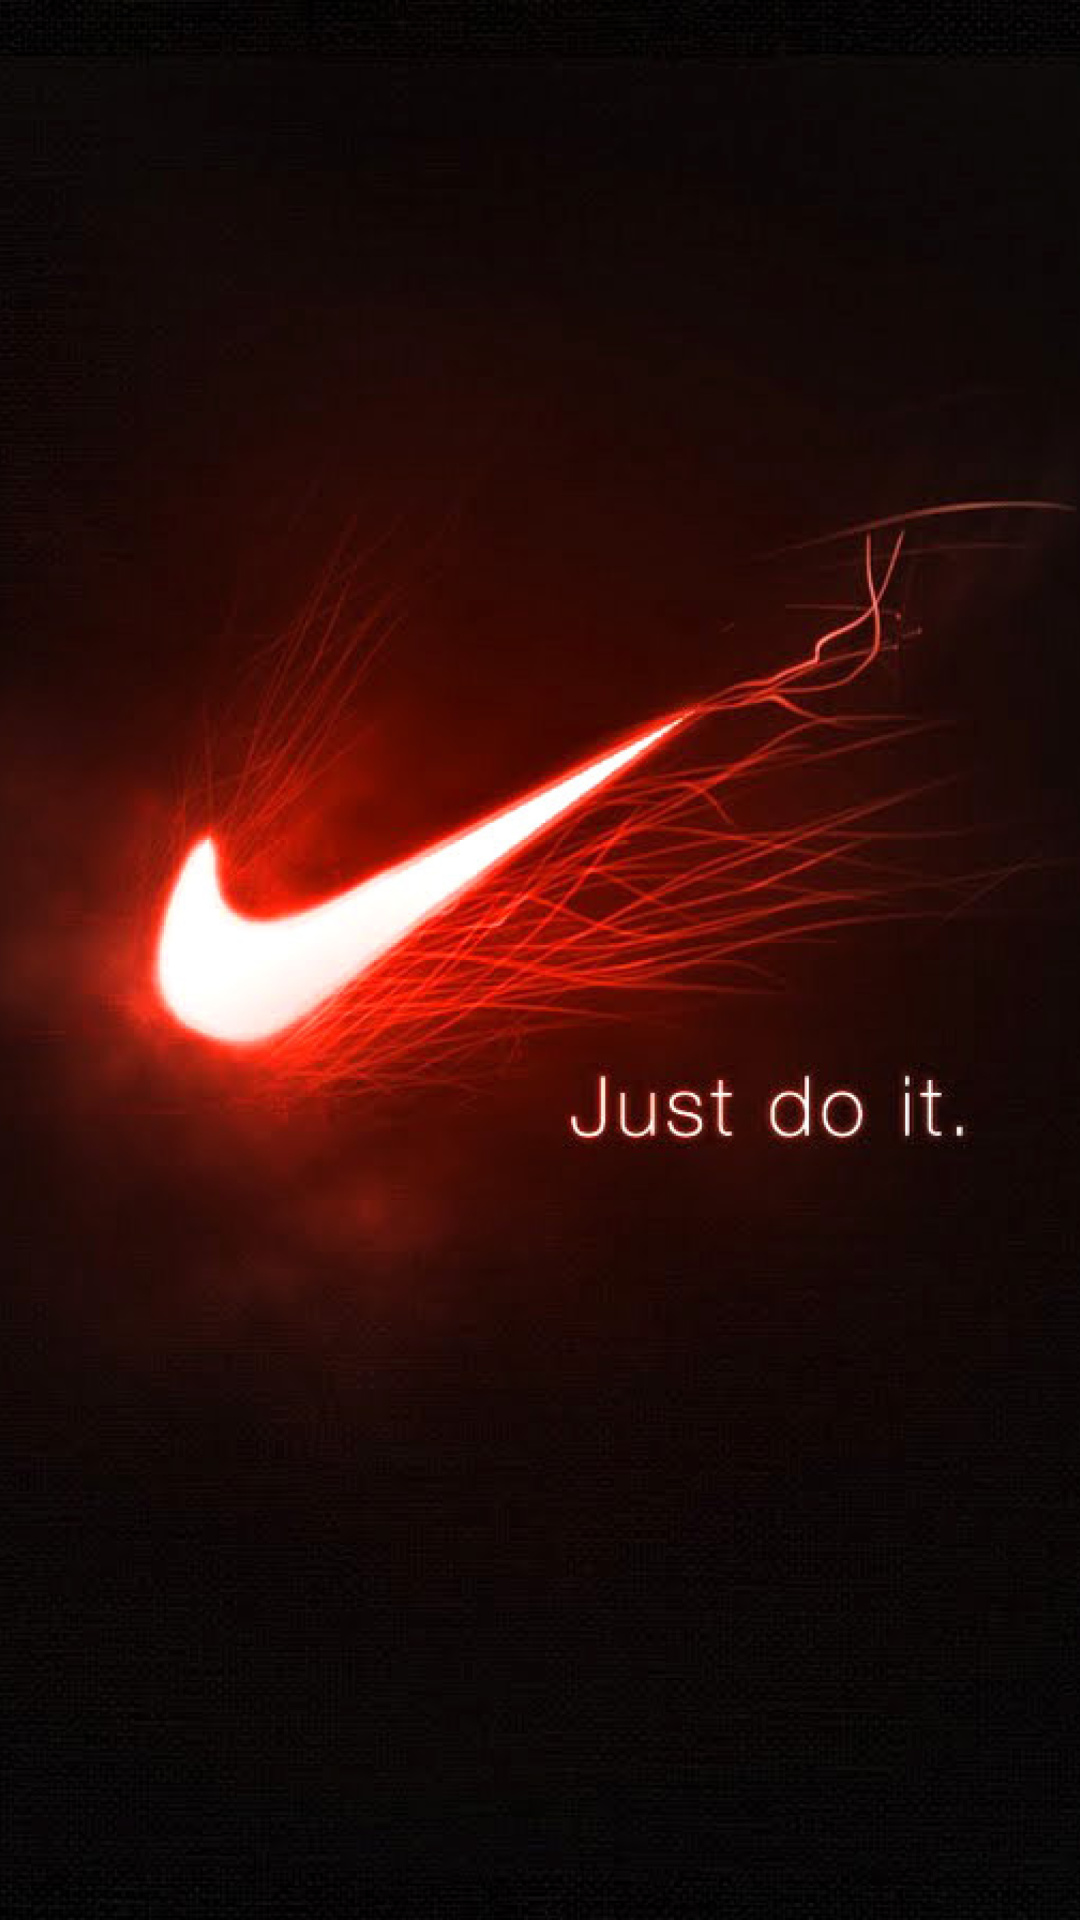 Das Nike Advertising Slogan Just Do It Wallpaper 1080x1920